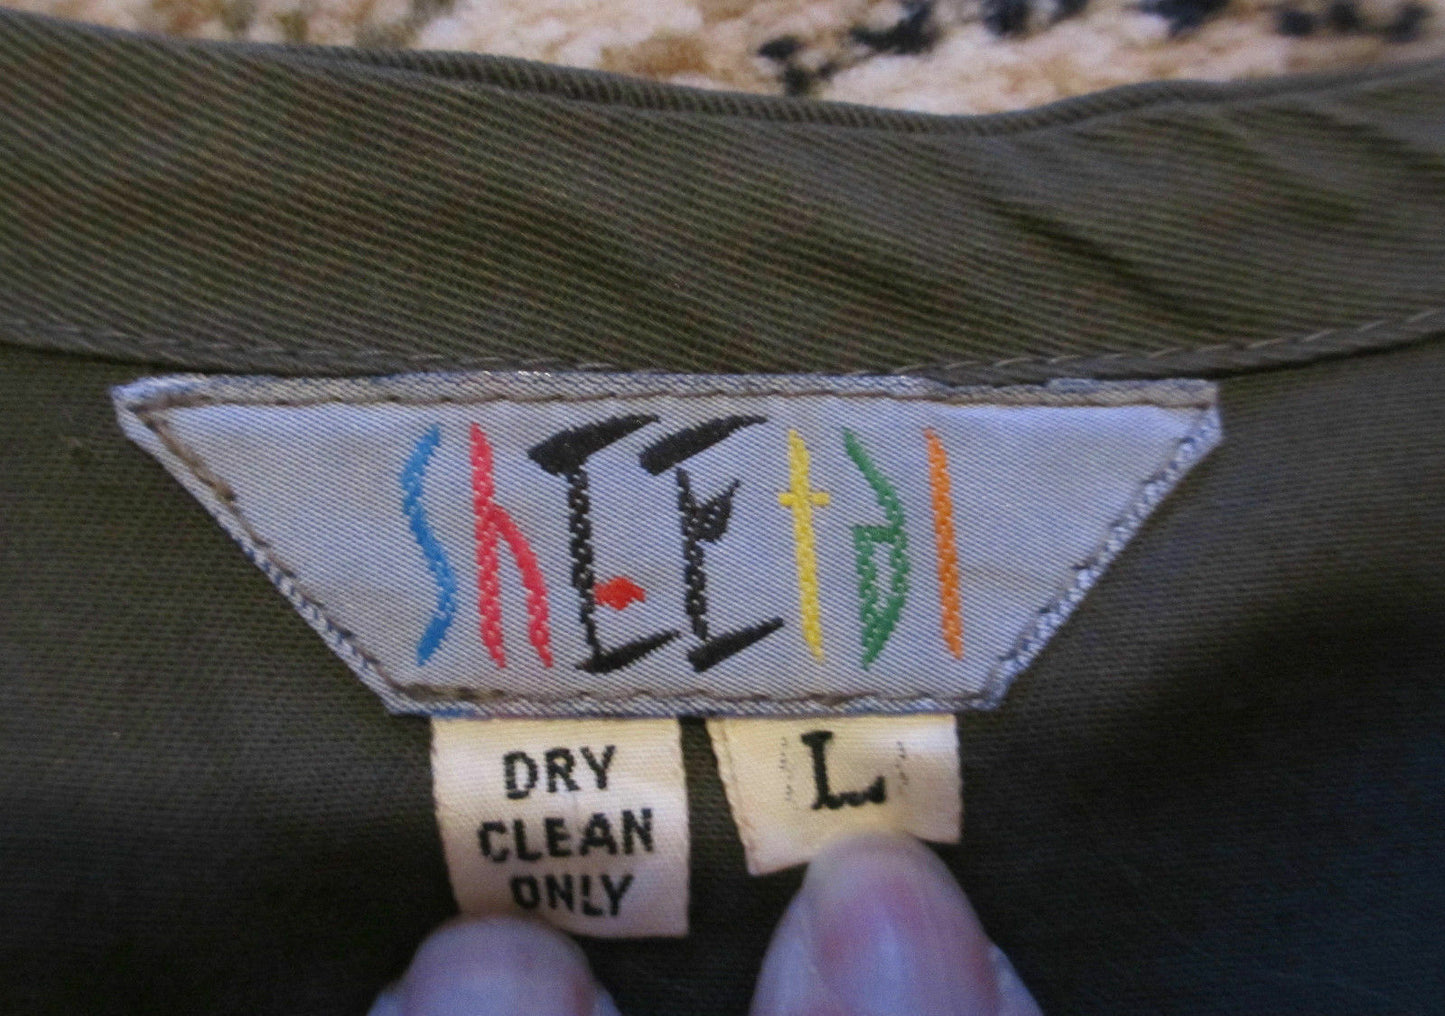 STEAM/PUnkVintage Military/army styleshort jacket Khaki,gathered sleeves  L12/14 Wonkey Donkey Bazaar